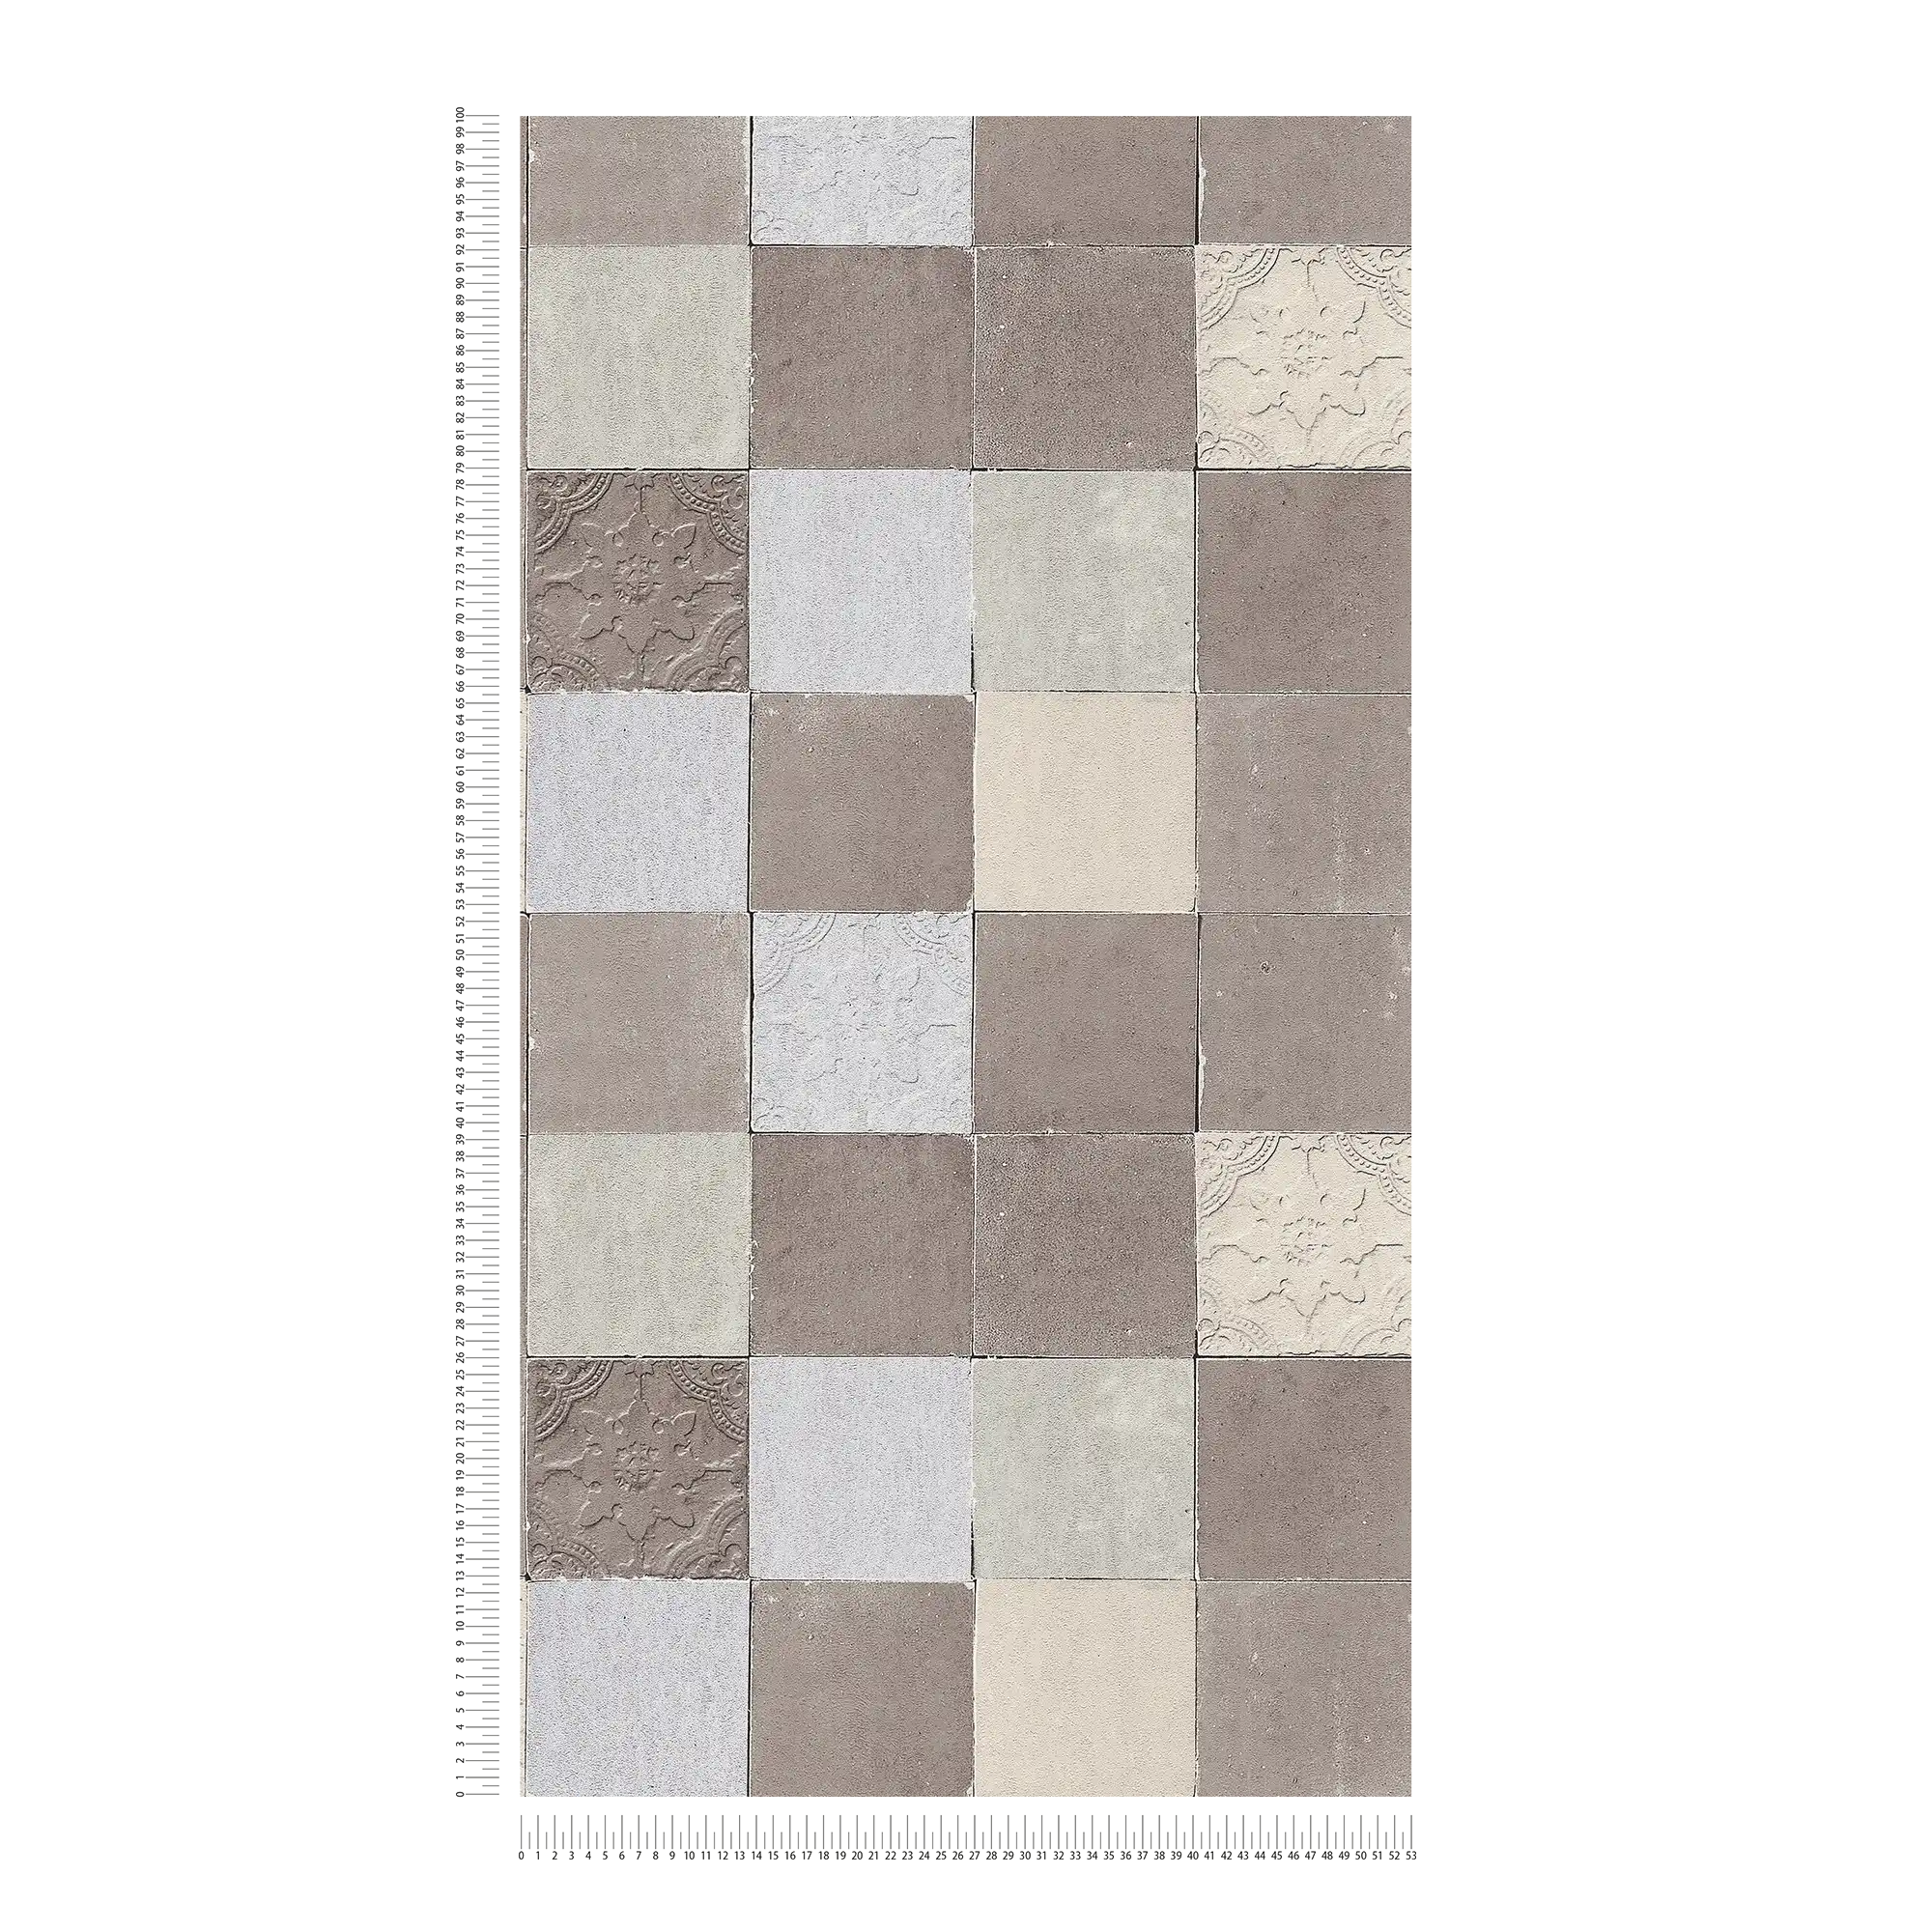             Carta da parati a piastrelle mosaico orientale - grigio, crema
        